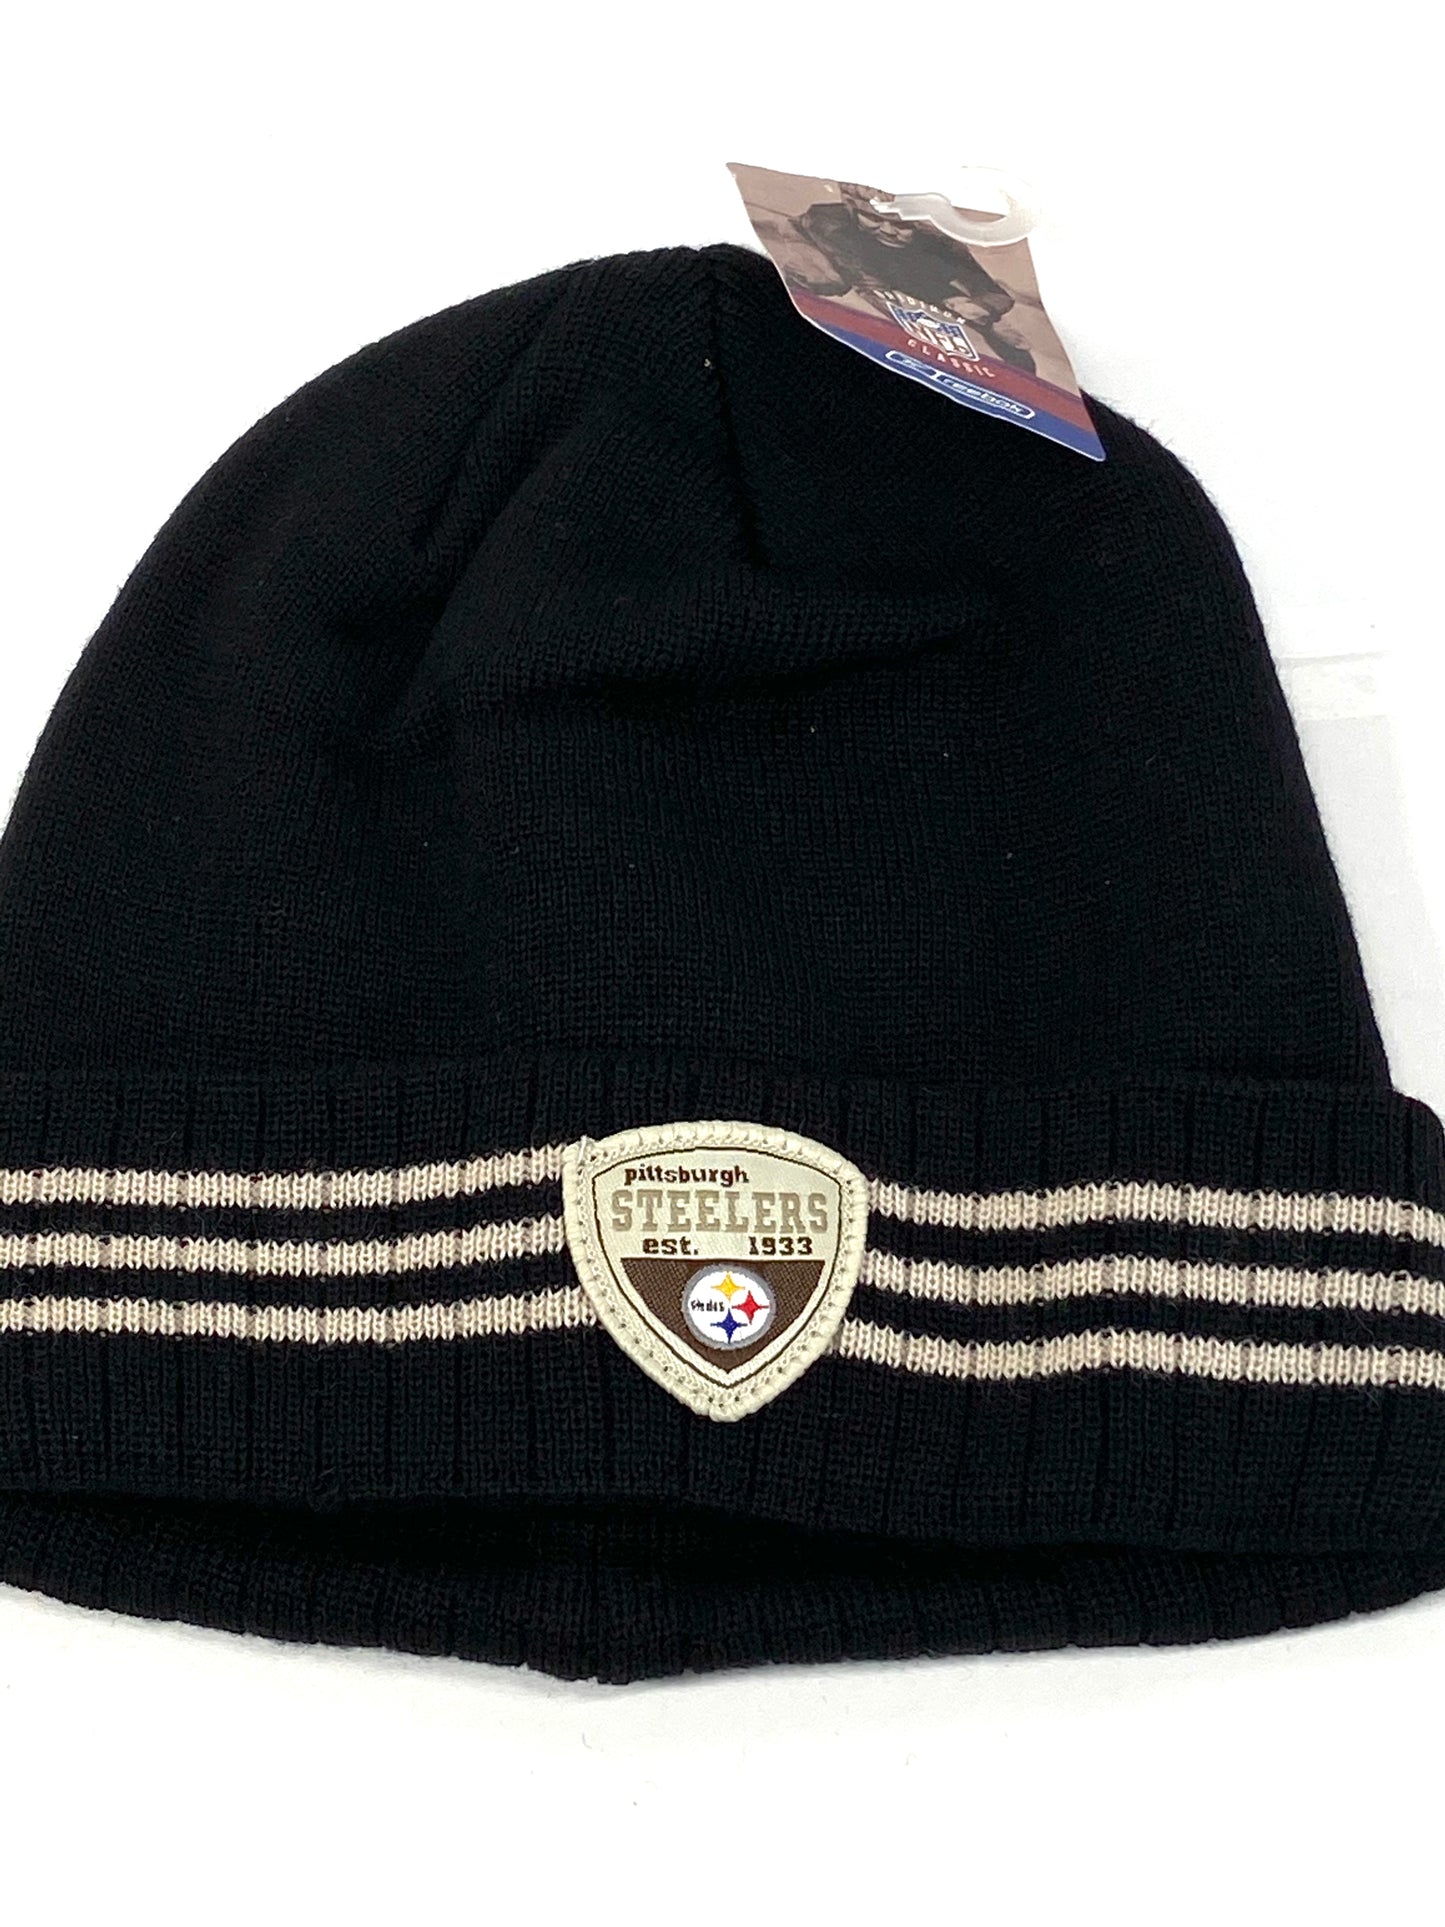 Pittsburgh Steelers Vintage 2002 NFL Cuffed Black "EST. 1933" Wool Knit Hat